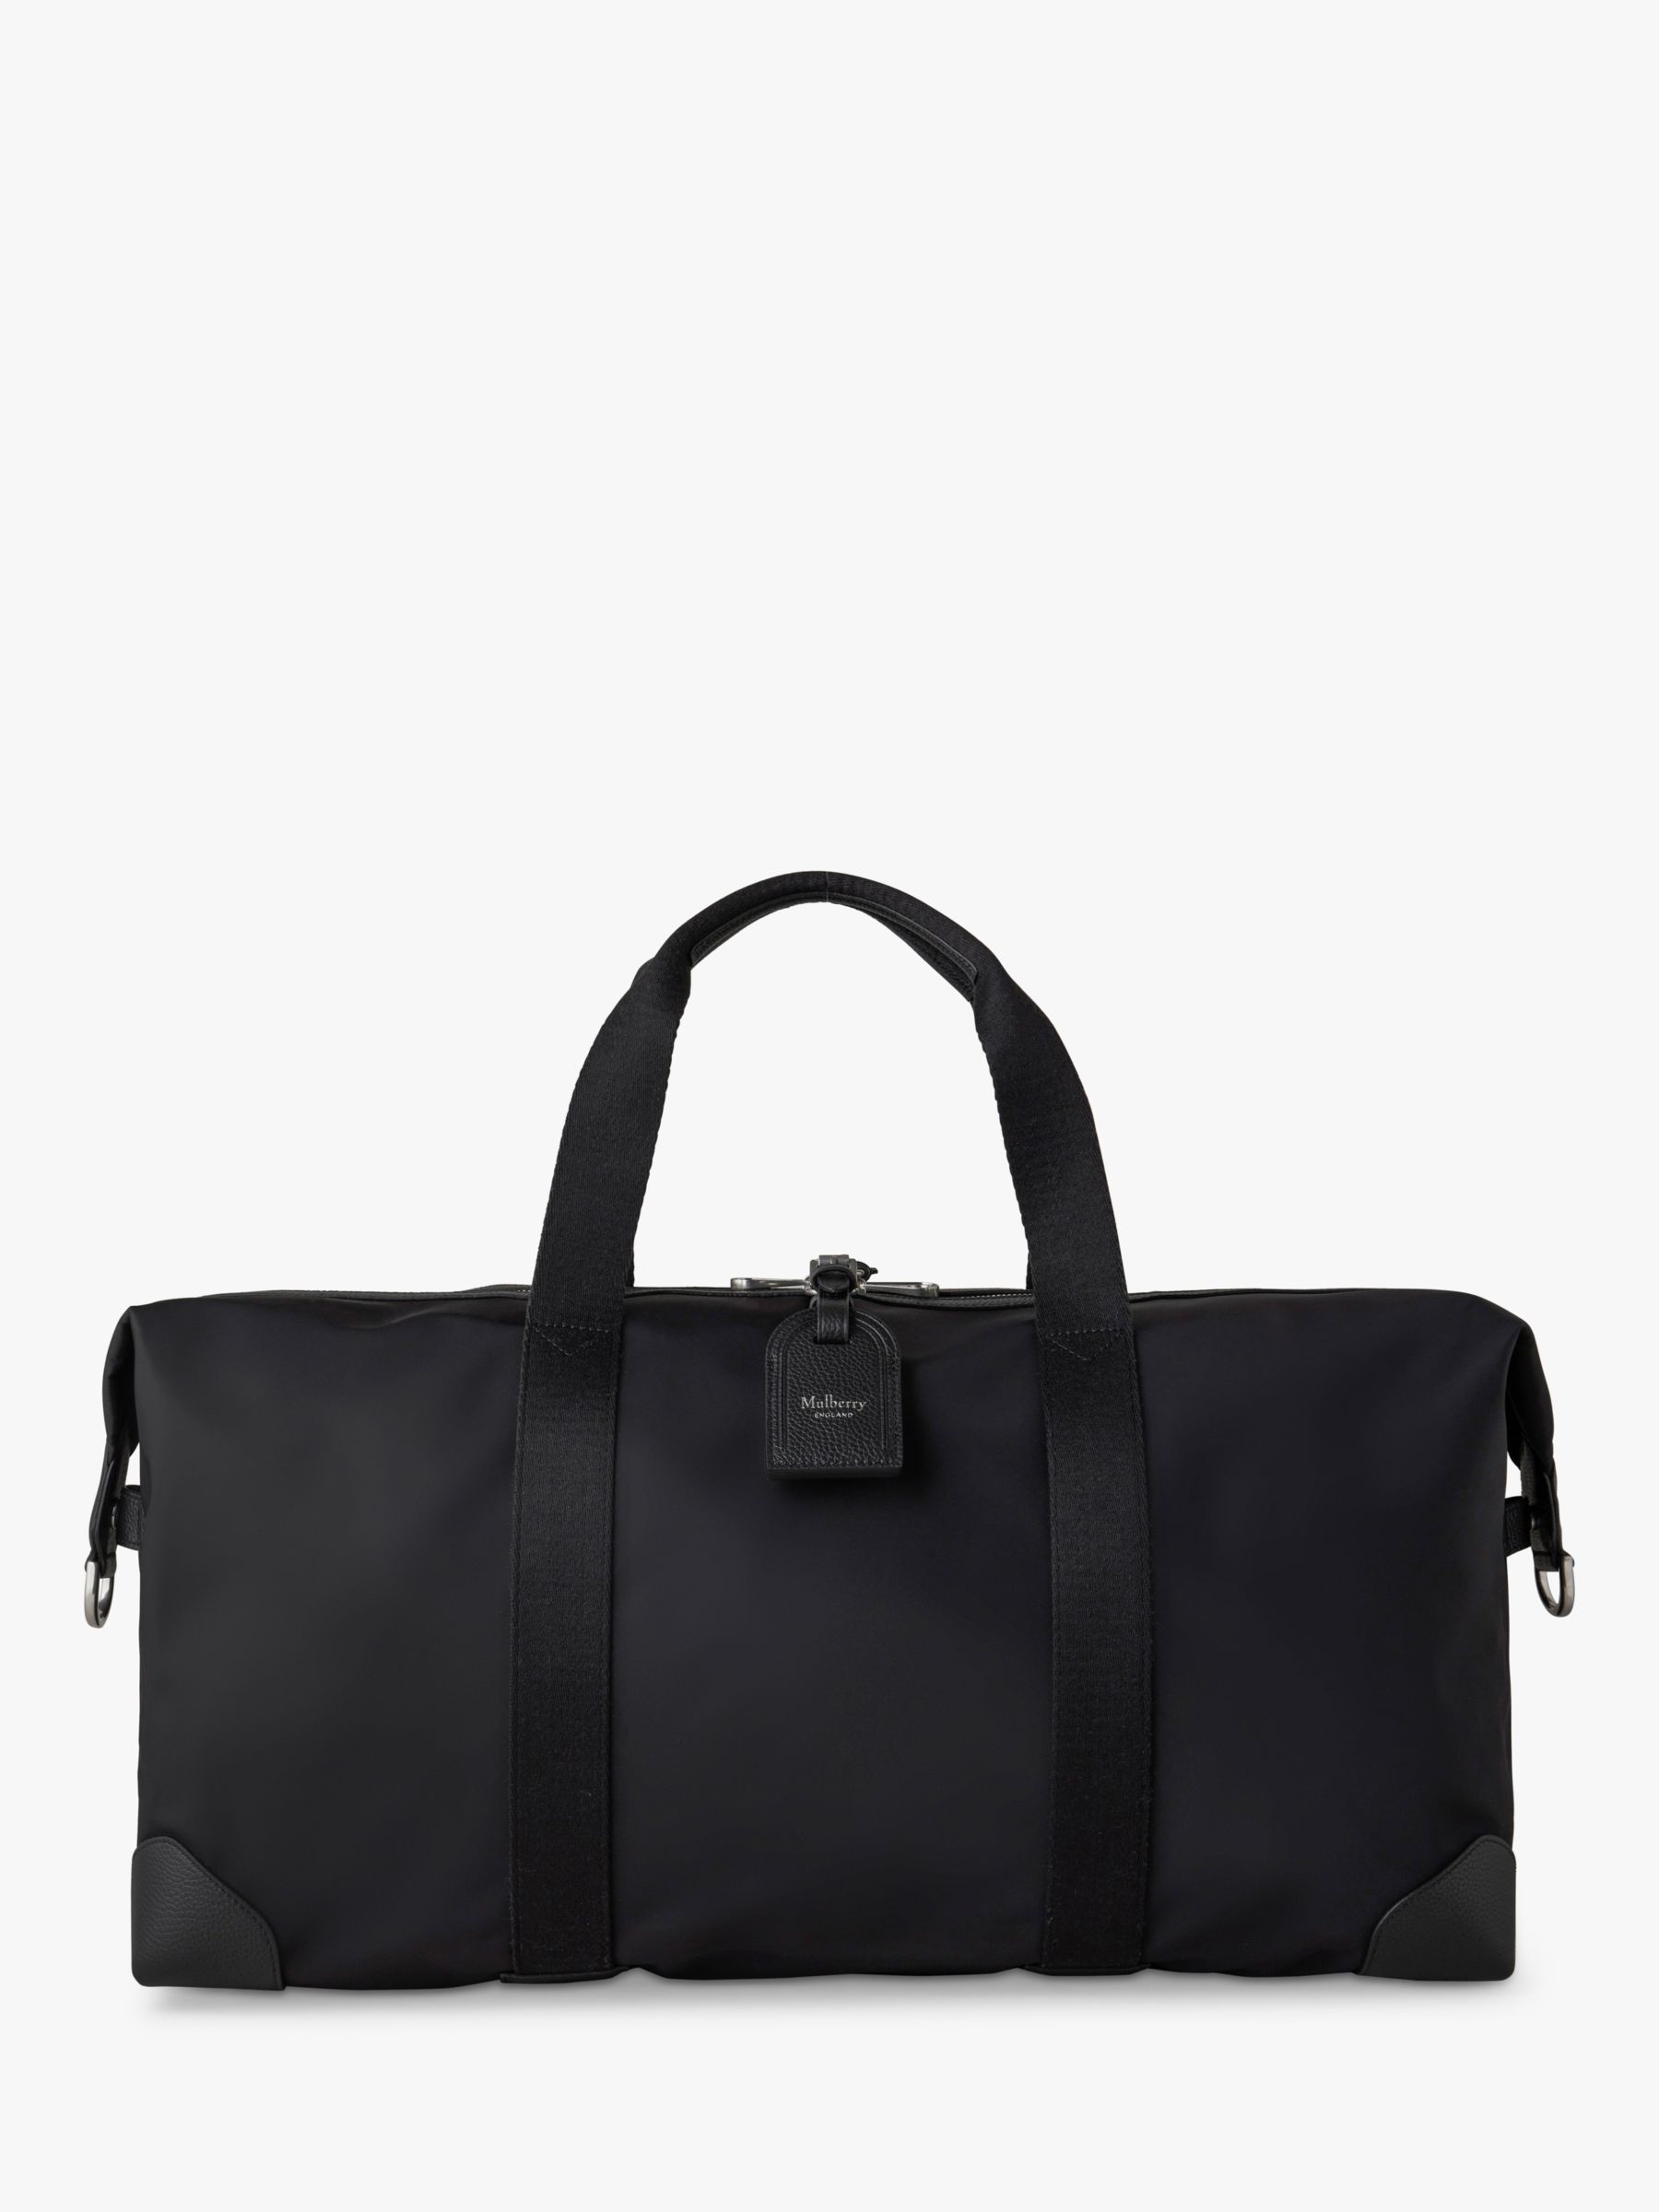 Mulberry Medium Clipper Travel Bag, Black at John Lewis & Partners